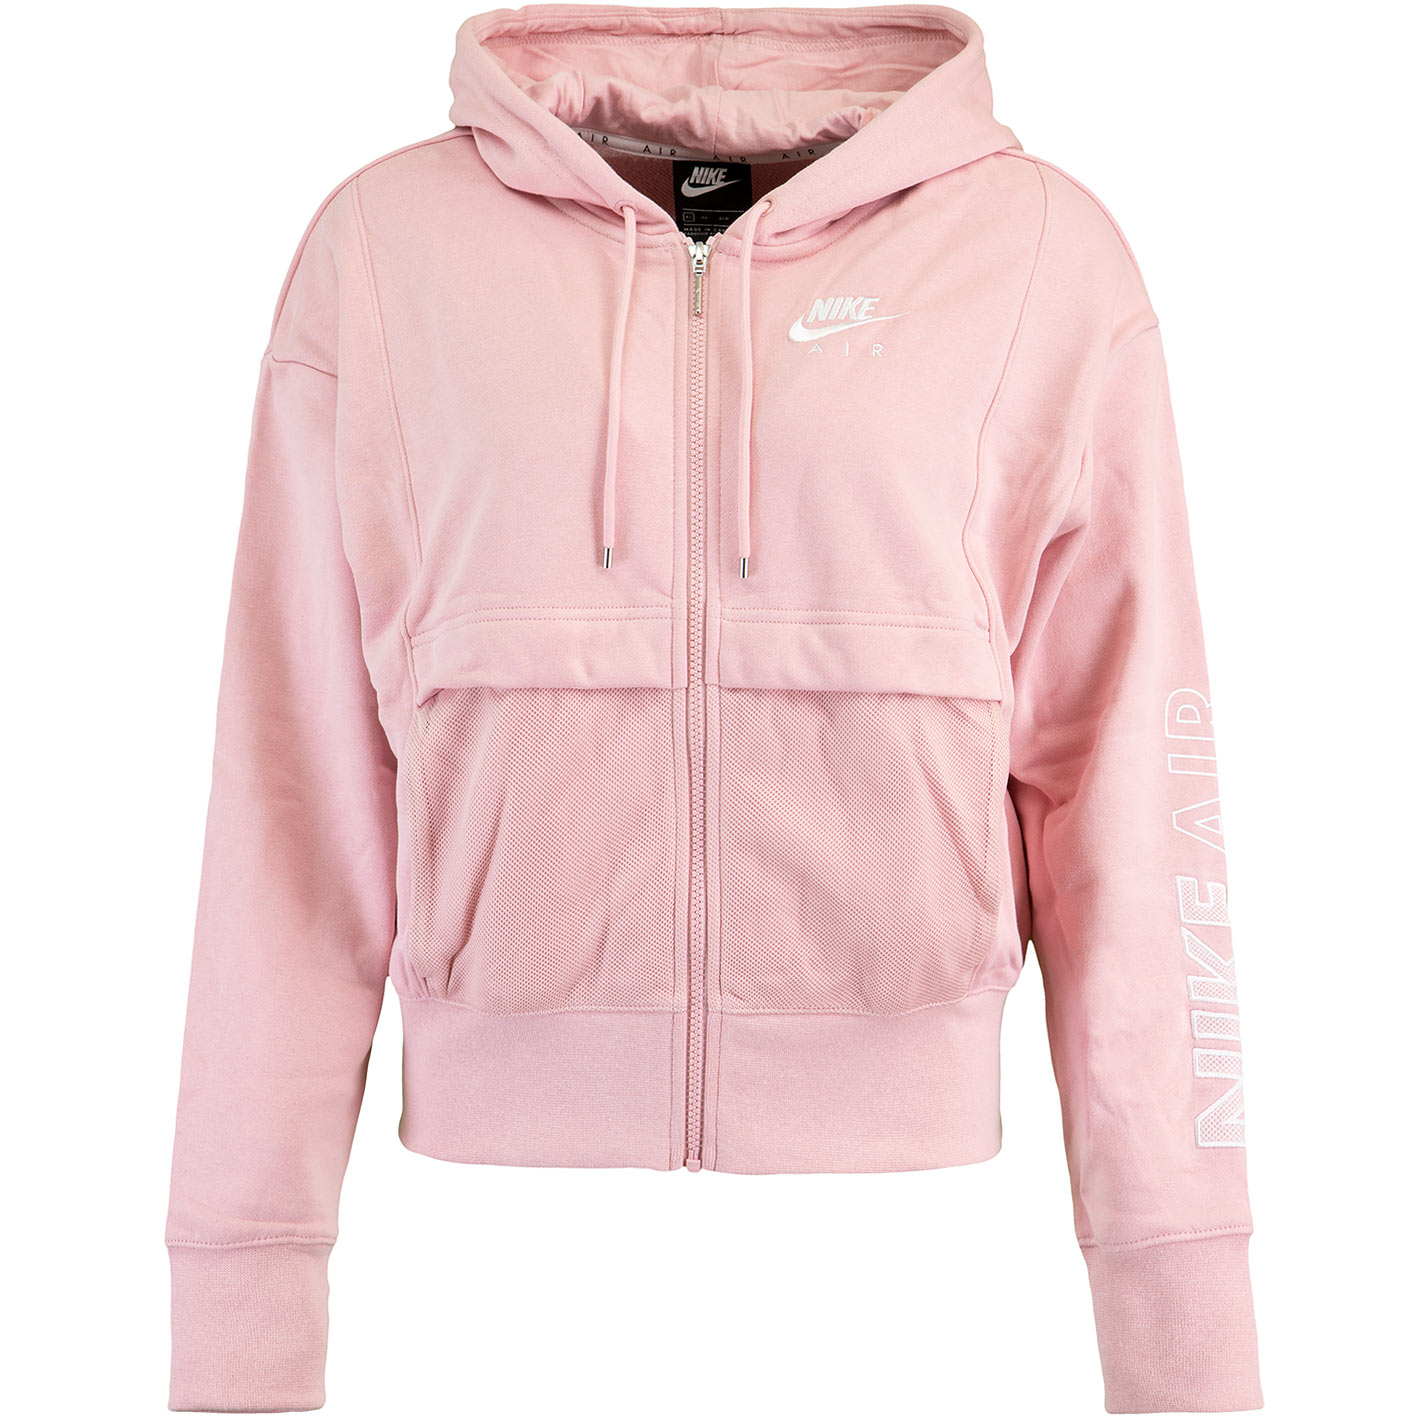 ☆ Nike Air Full Zip Damen Hoody pink - hier bestellen!